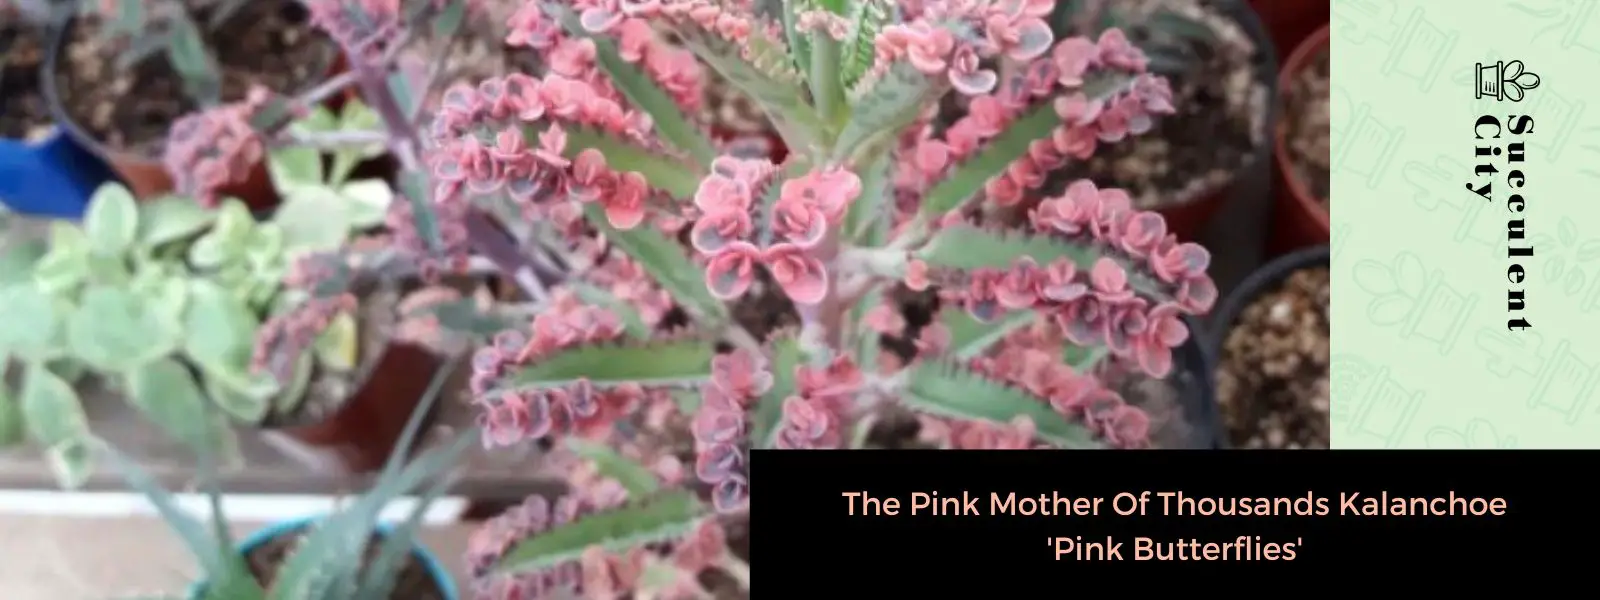 La madre rosa de mil 'mariposas rosadas' de Kalanchoe